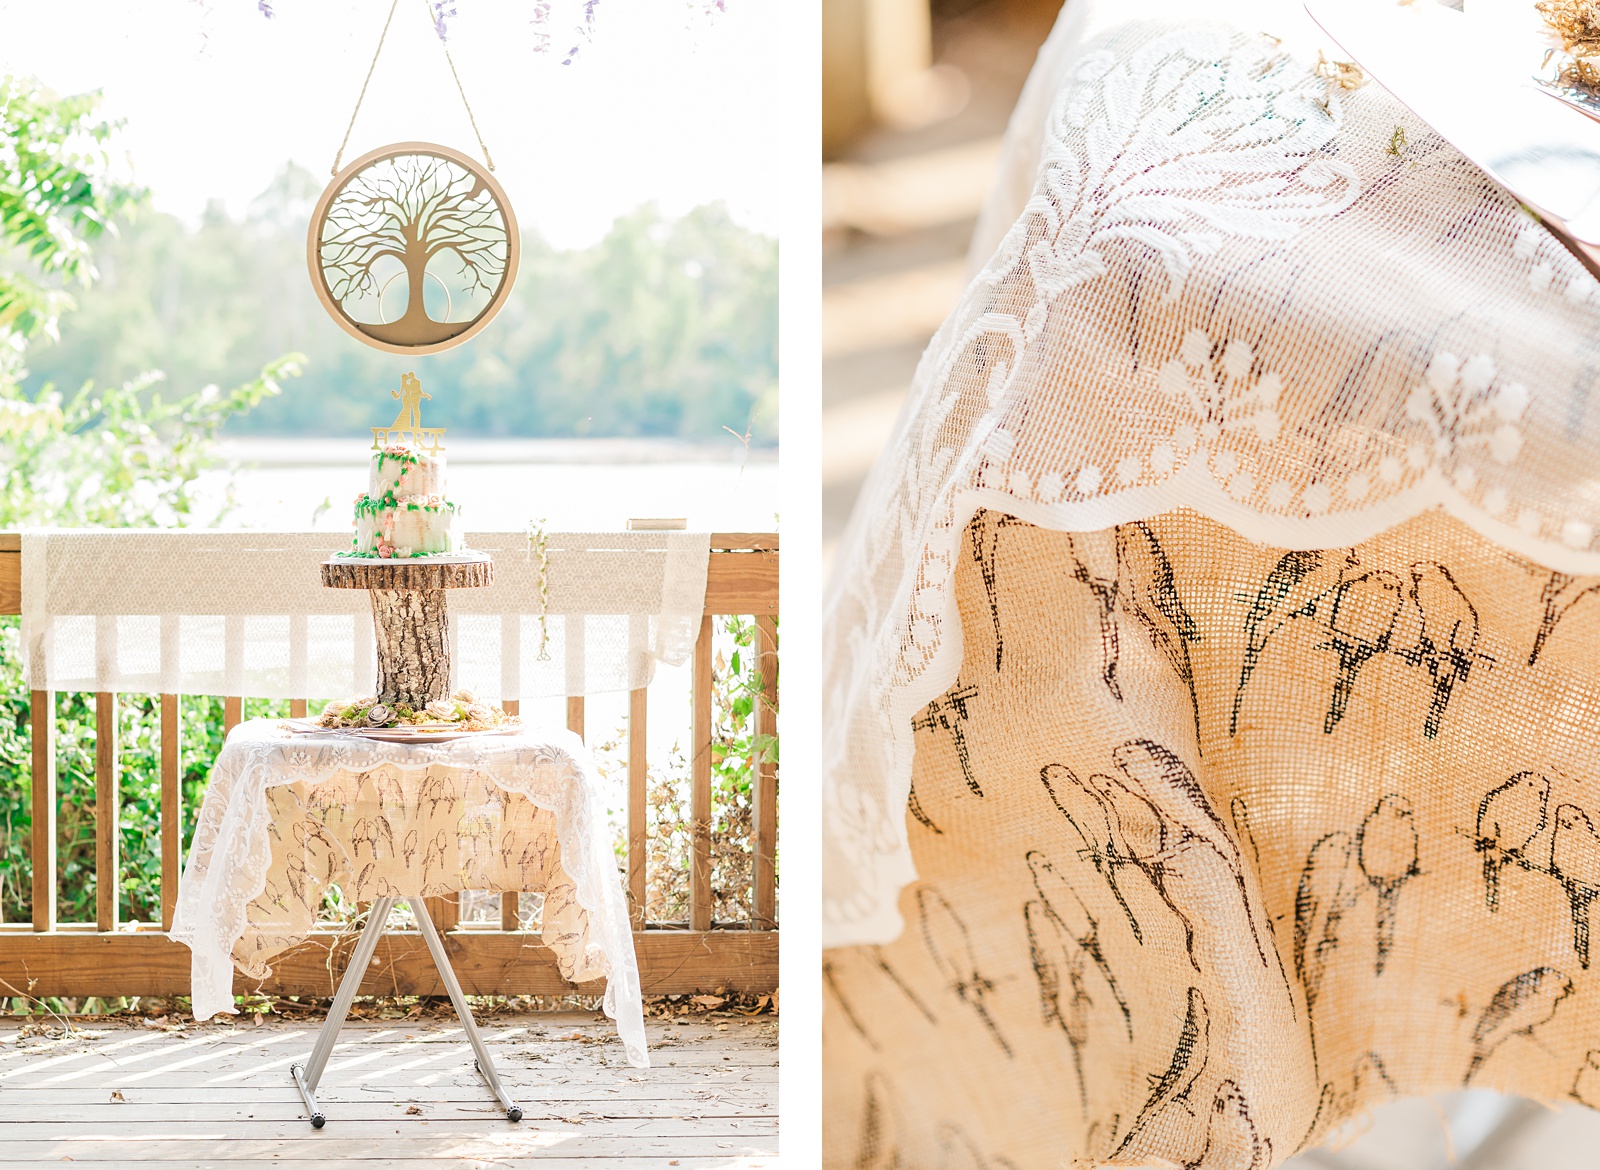 Fairytale Intimate Wedding Cake Cutting and Toasts. Virginia Wedding Photographer Kailey Brianne Photography. 